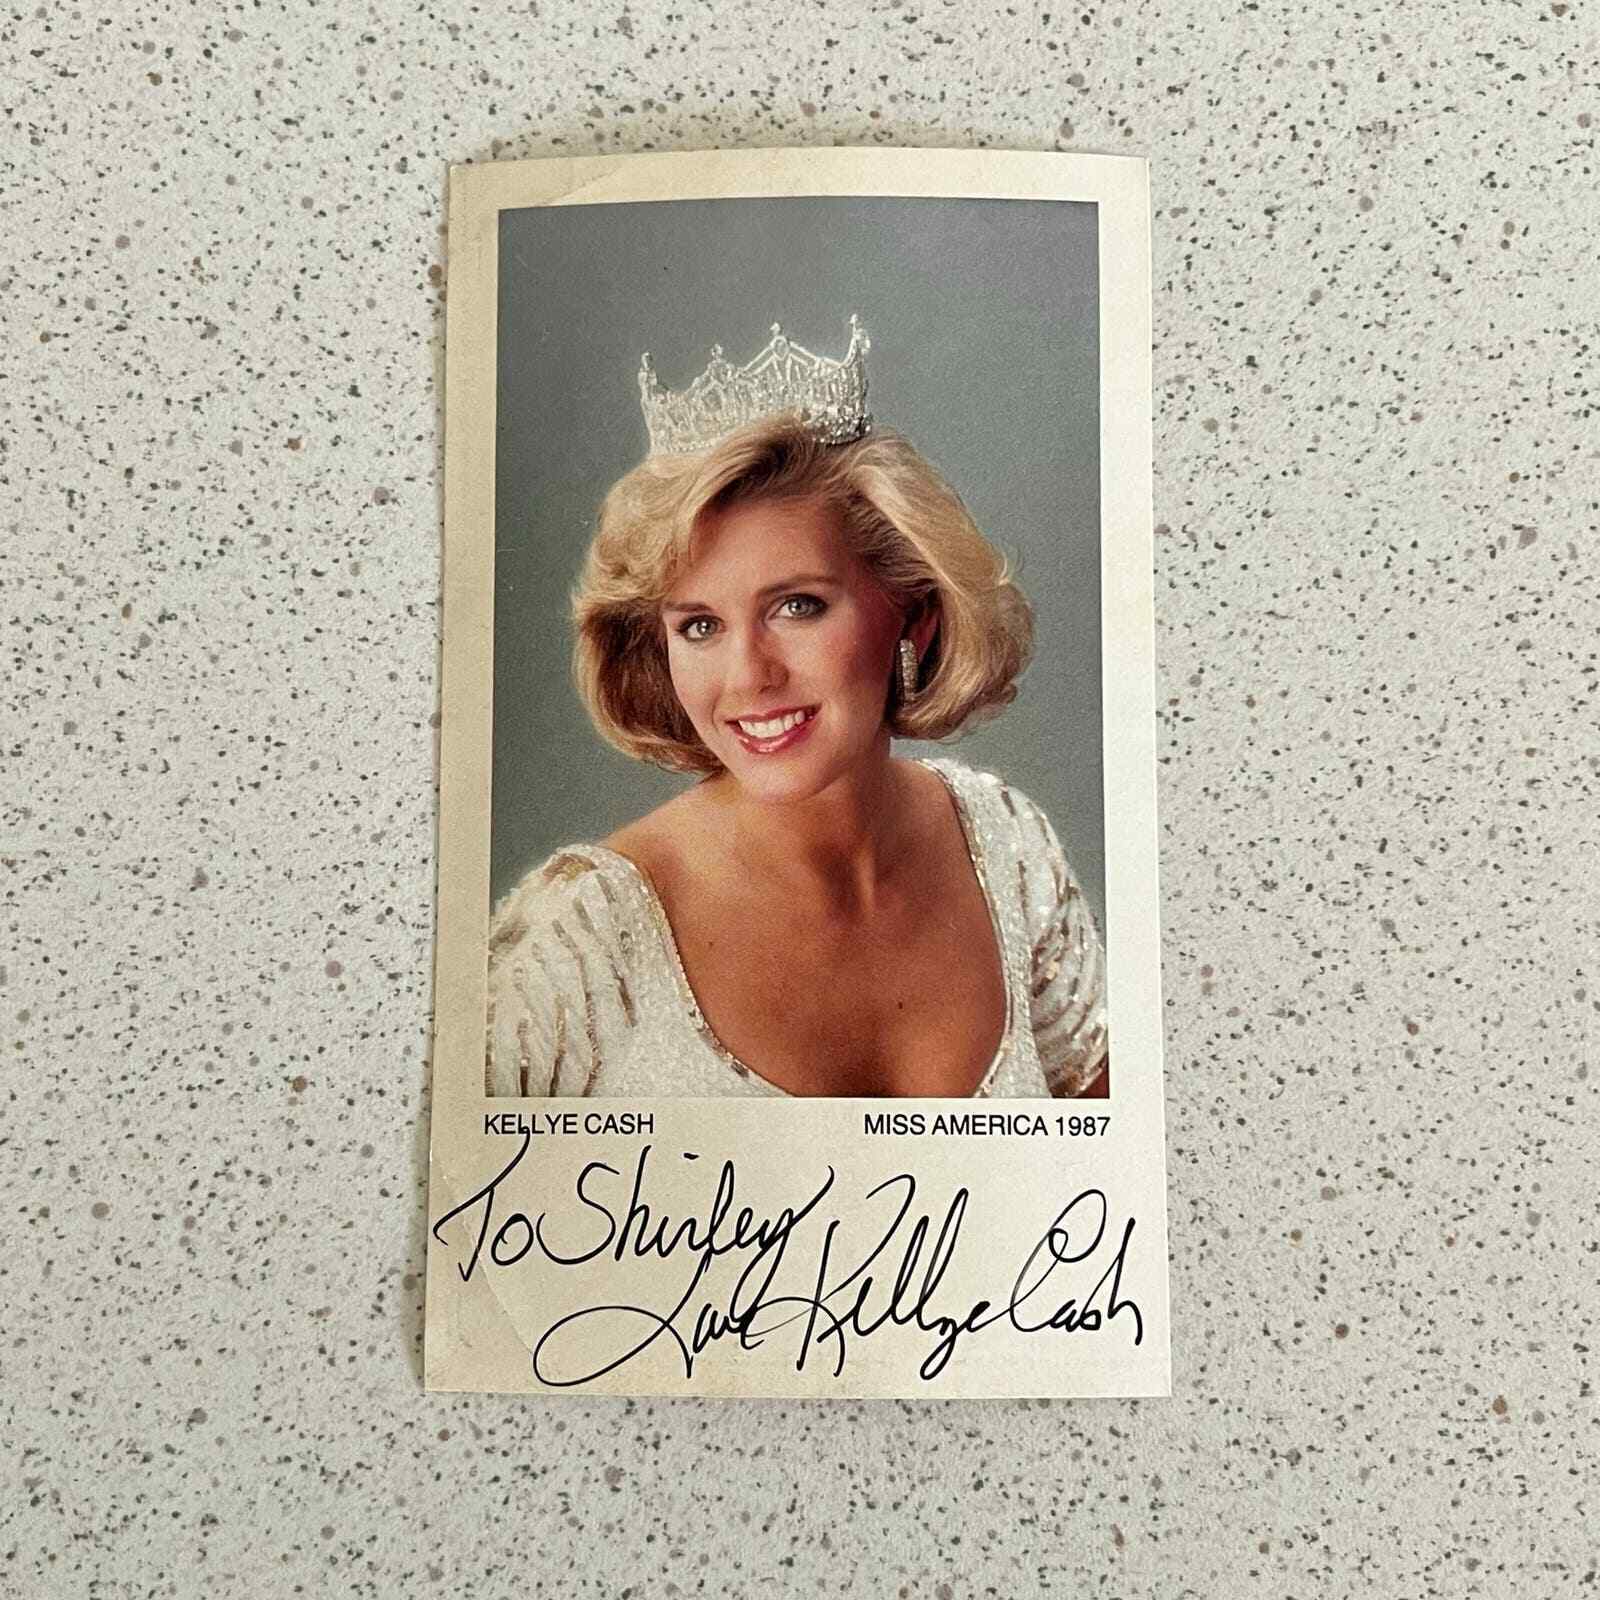 Miss America 1987 Kellye Cash Personalized Autograph Picture Photograph 6 x 3.5